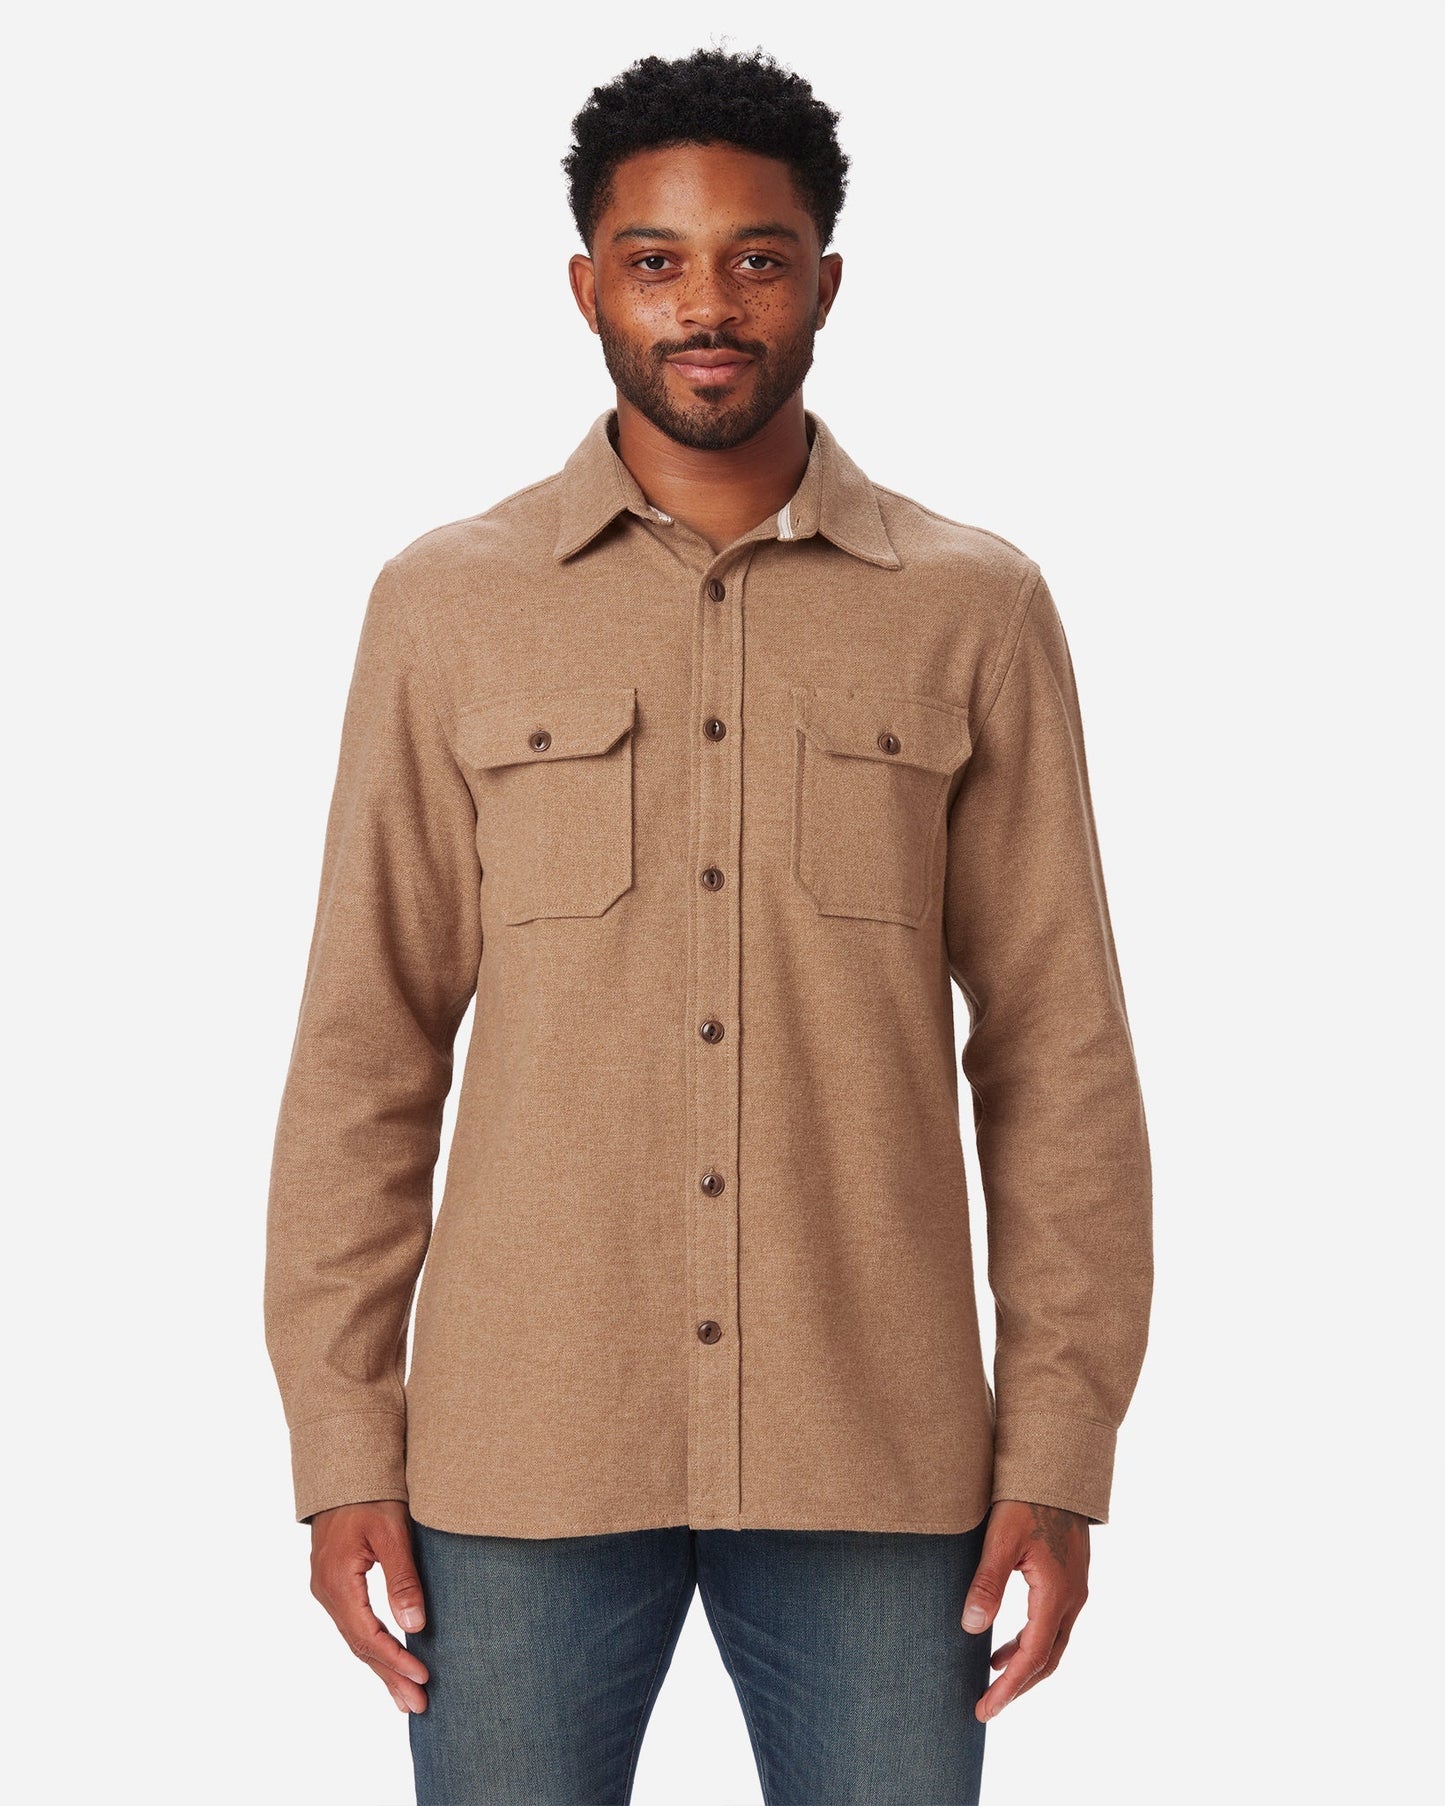 Winter Flannel - Utility Shirt - Camel - H1